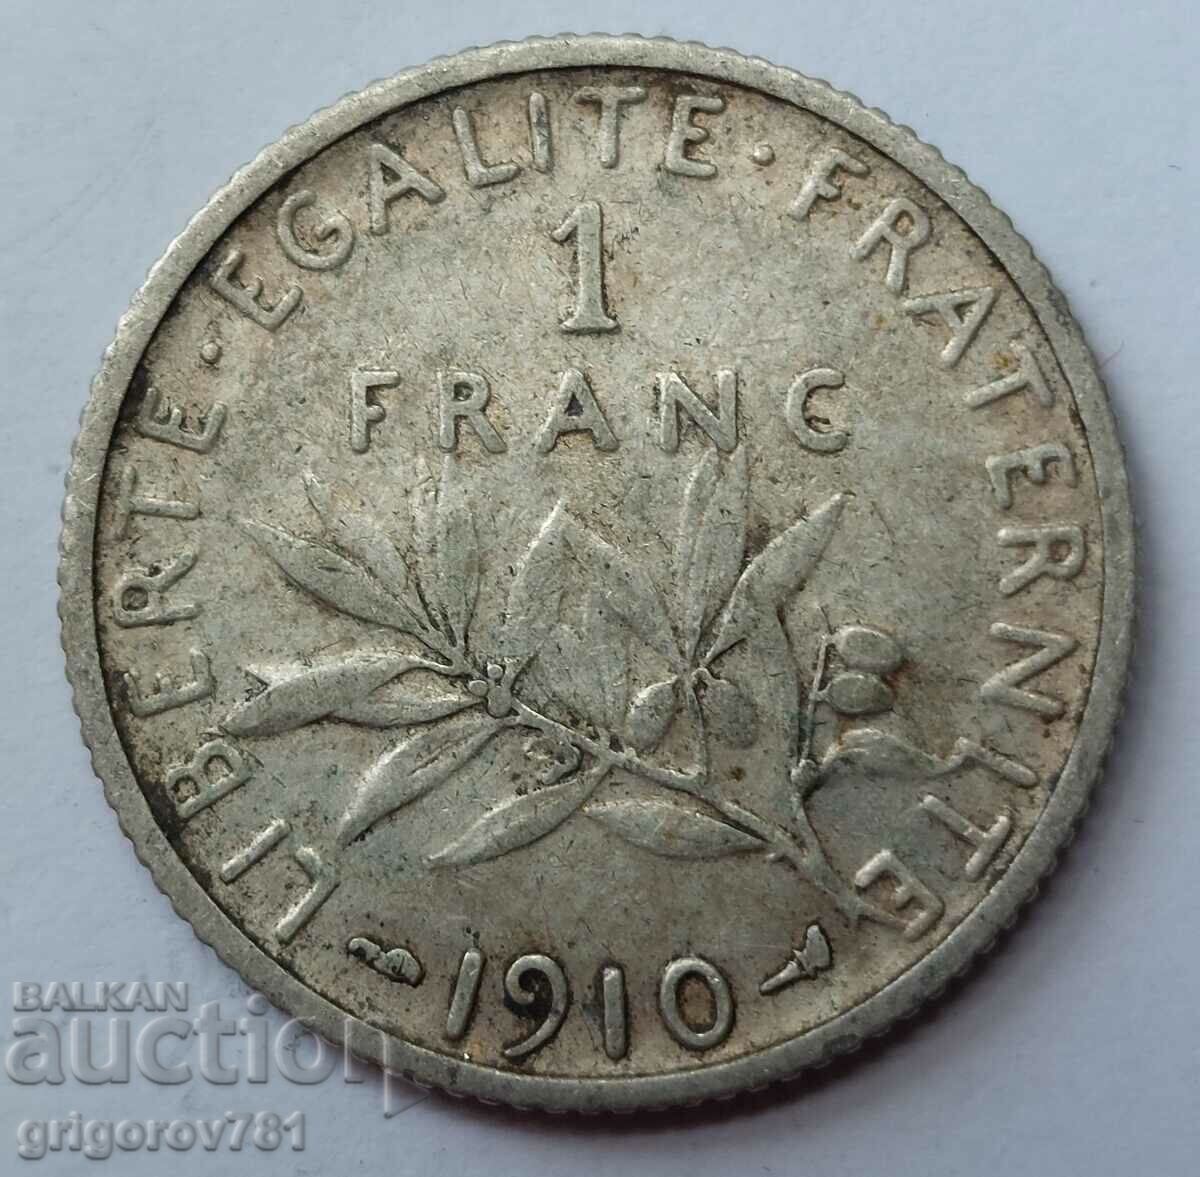 1 franc silver France 1910 - silver coin №30